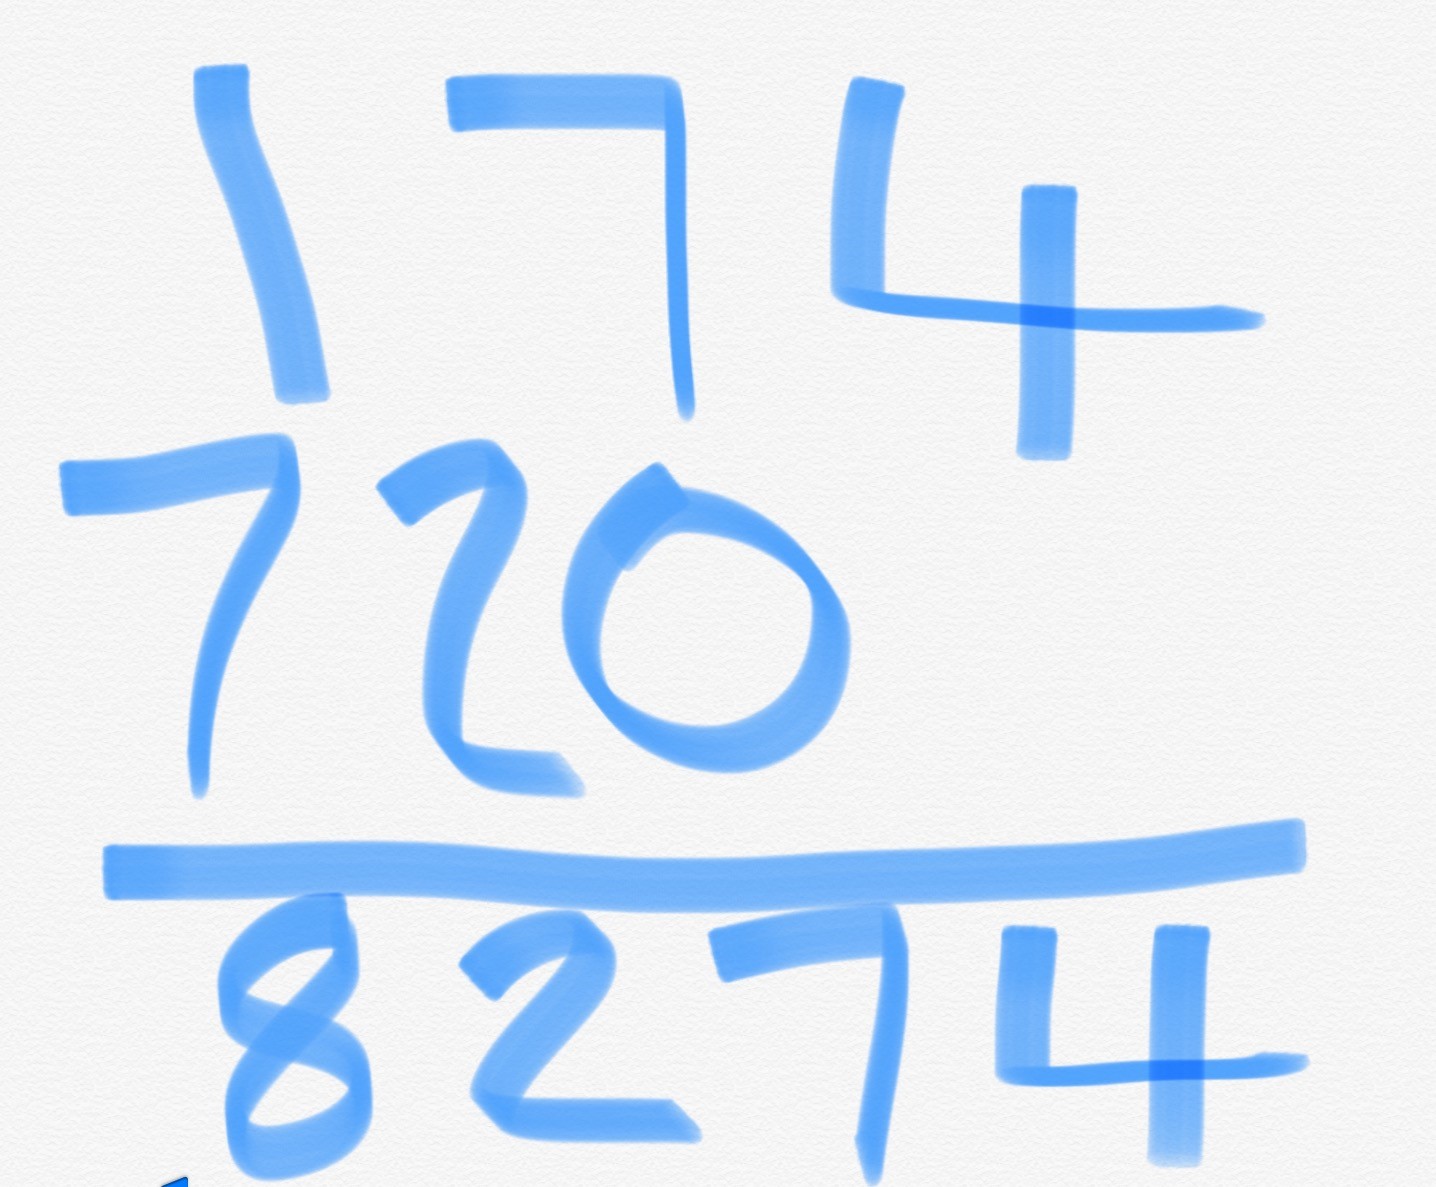 Image of handwritten arithmetic